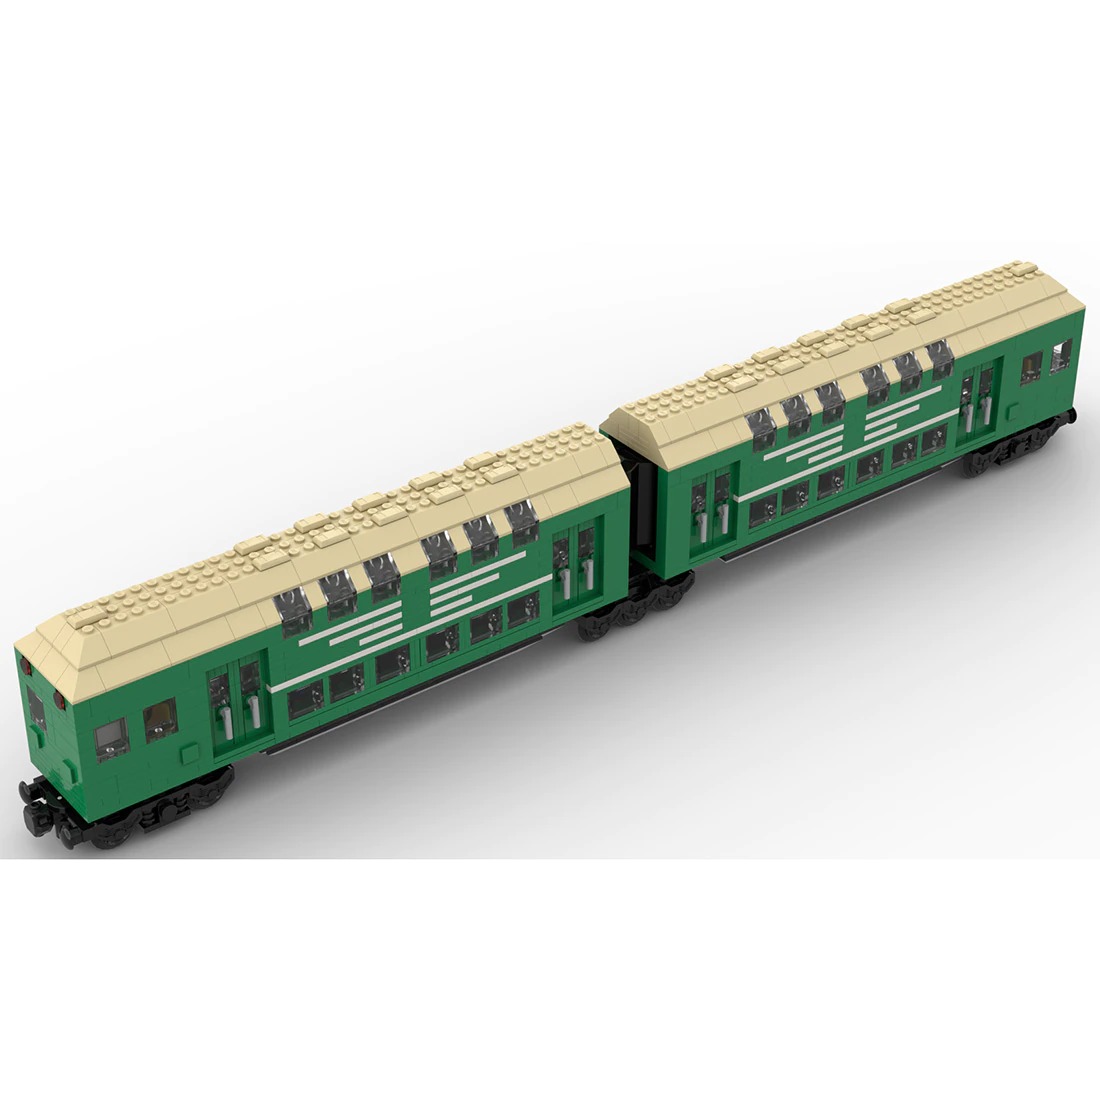 authorized moc 109281 7 axle train carri main 2 - ZHEGAO Block